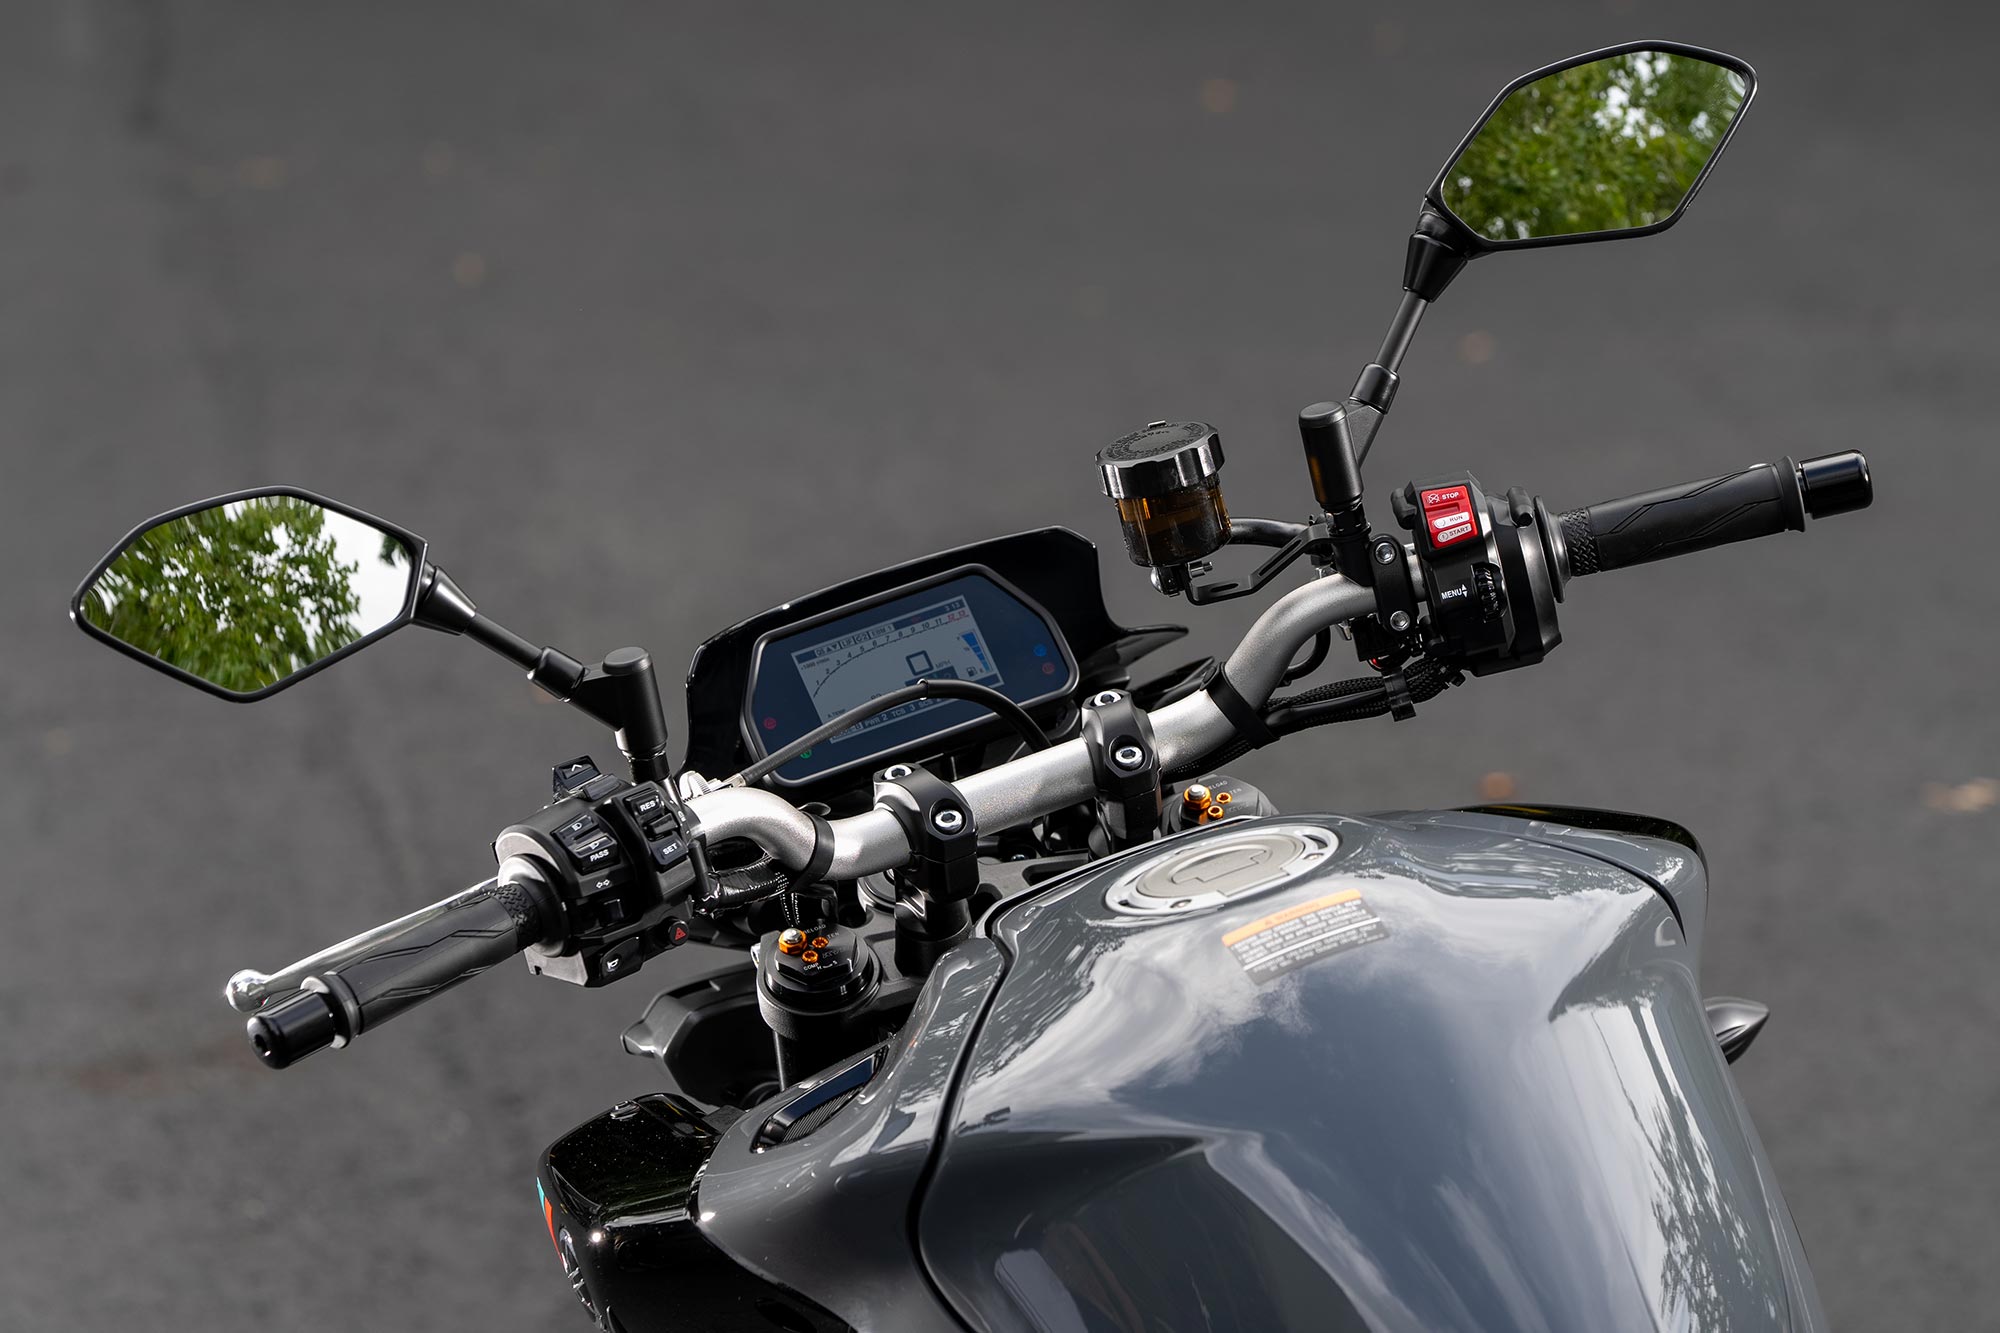 2022 Yamaha MT-10 Buyer's Guide: Specs, Photos, Price